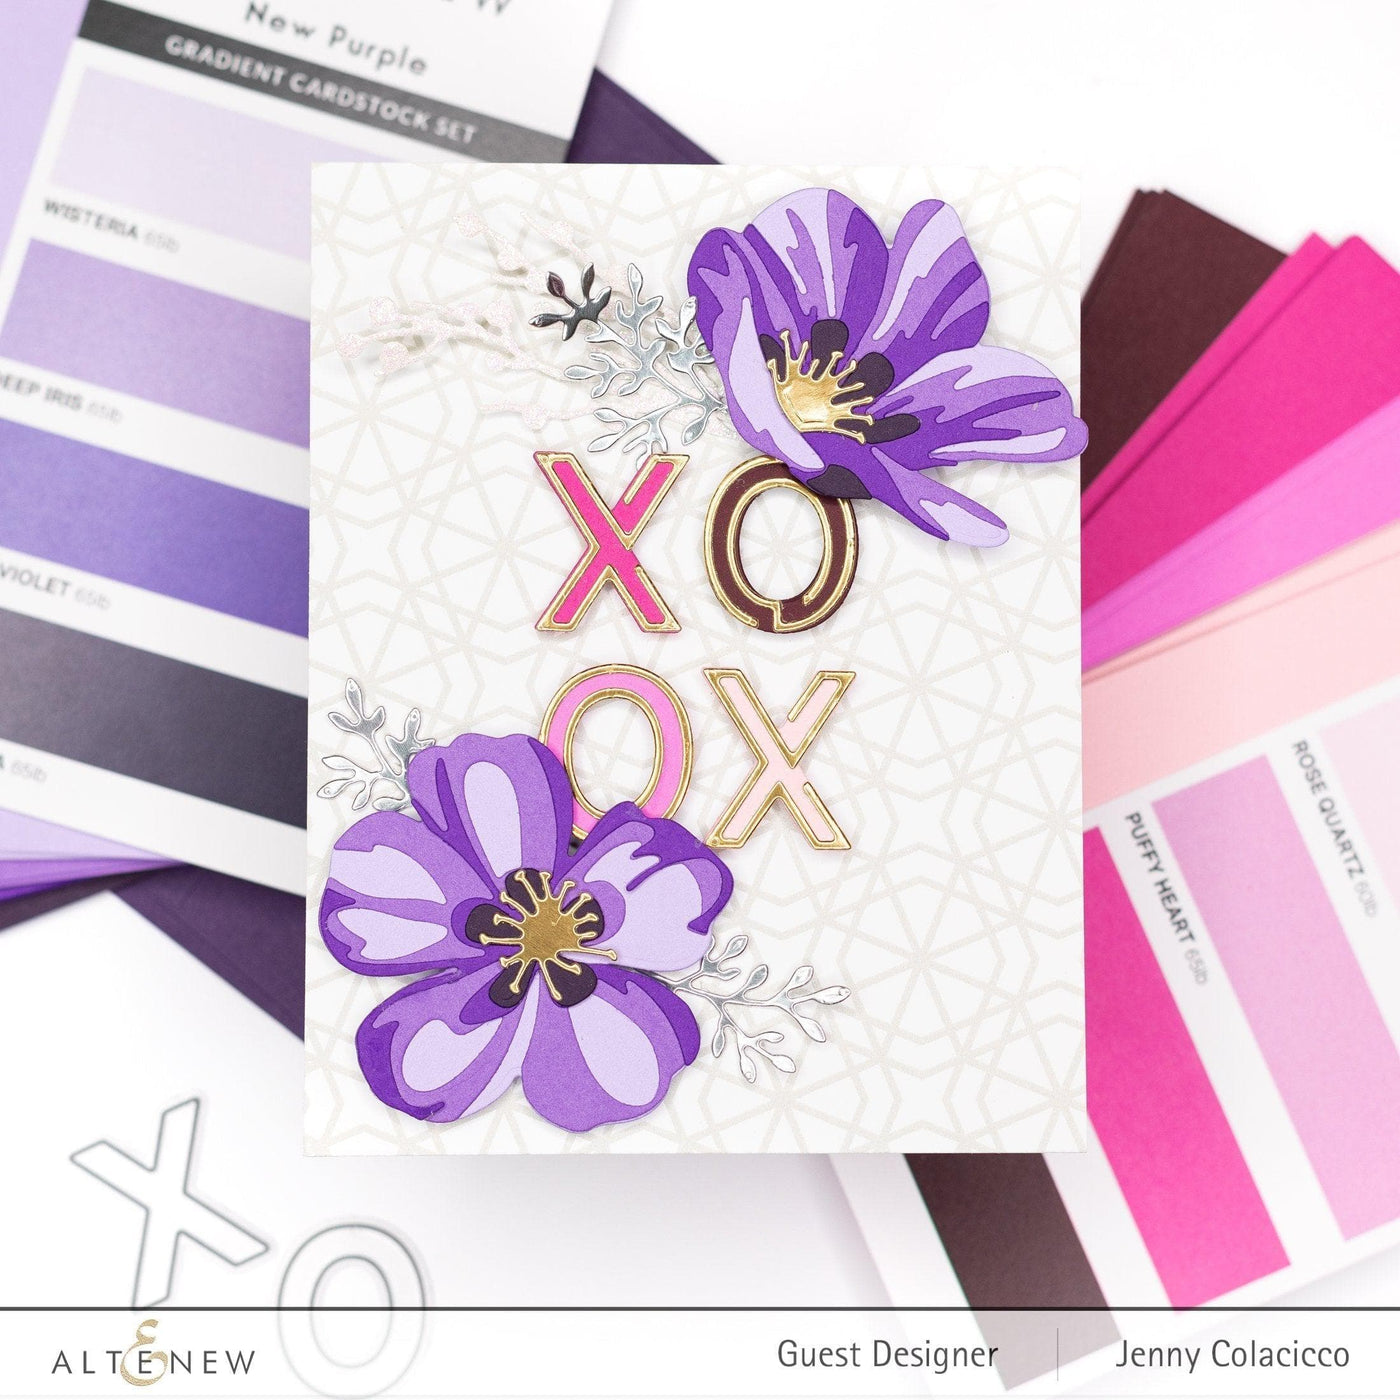 Altenew Die & Paper Bundle New Purple Gradient Cardstock & Garden Picks 3D Die Set Bundle